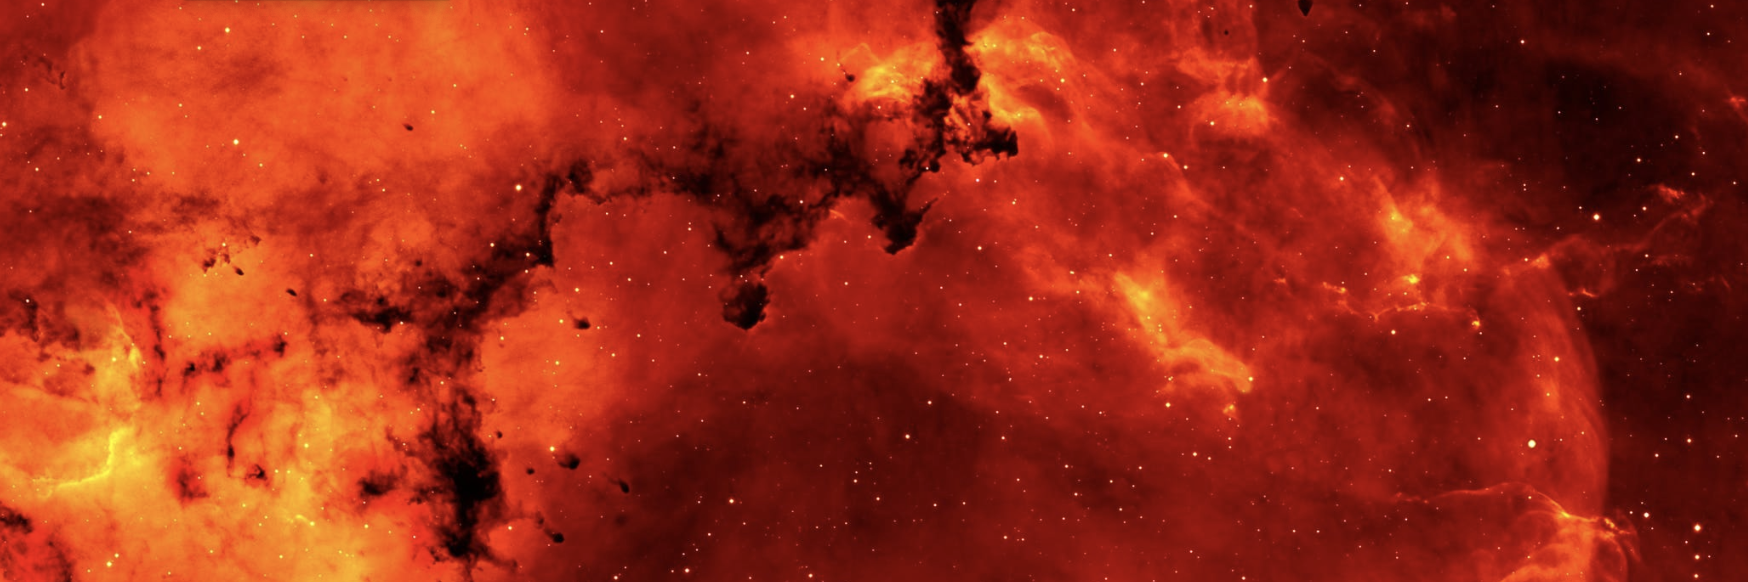 nebula feb2019 b